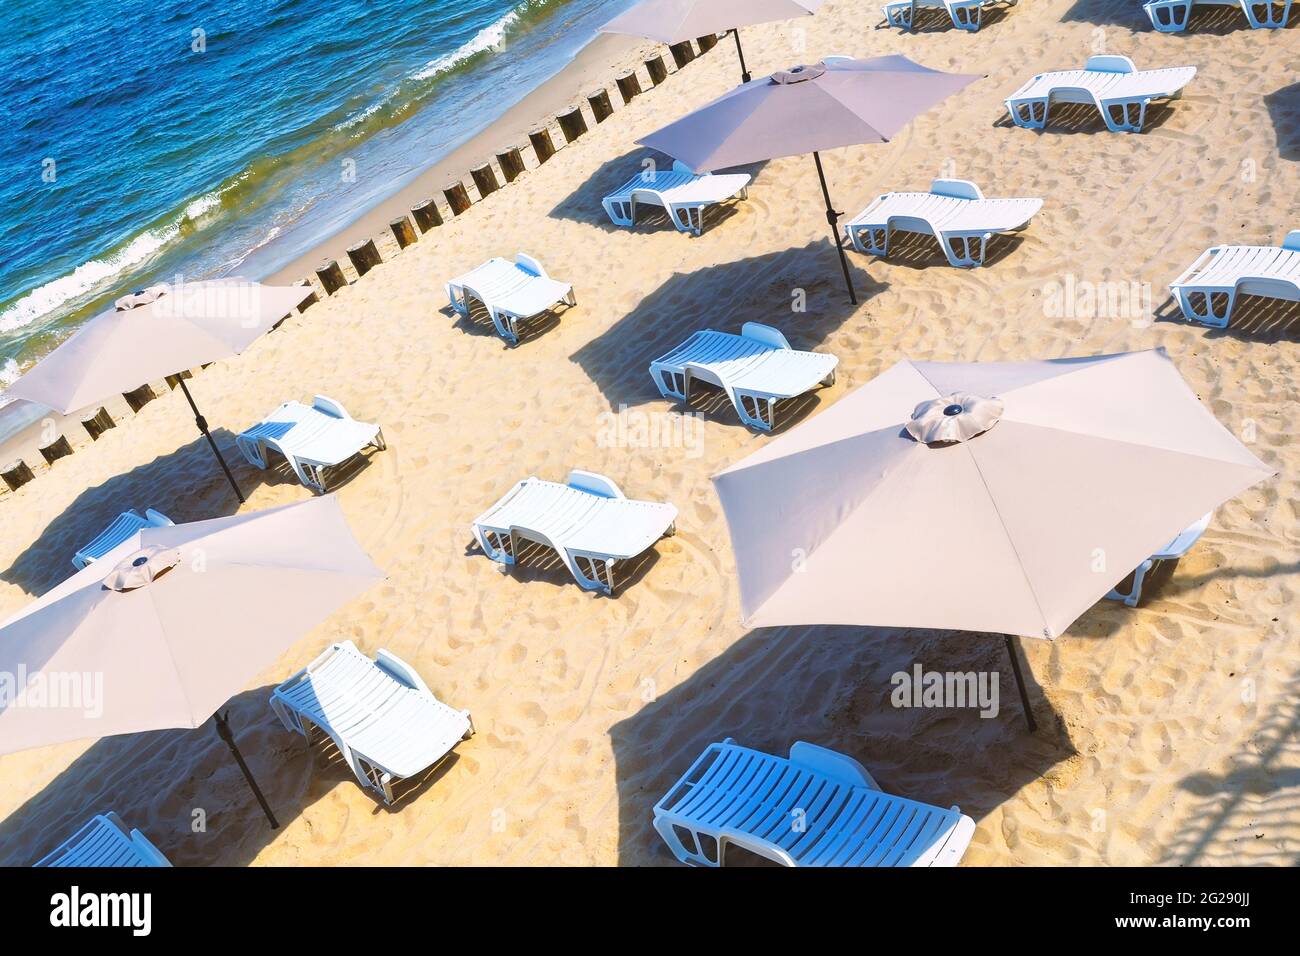 Empty deck chairs and sun umbrellas on a sandy beach. Stock Photo